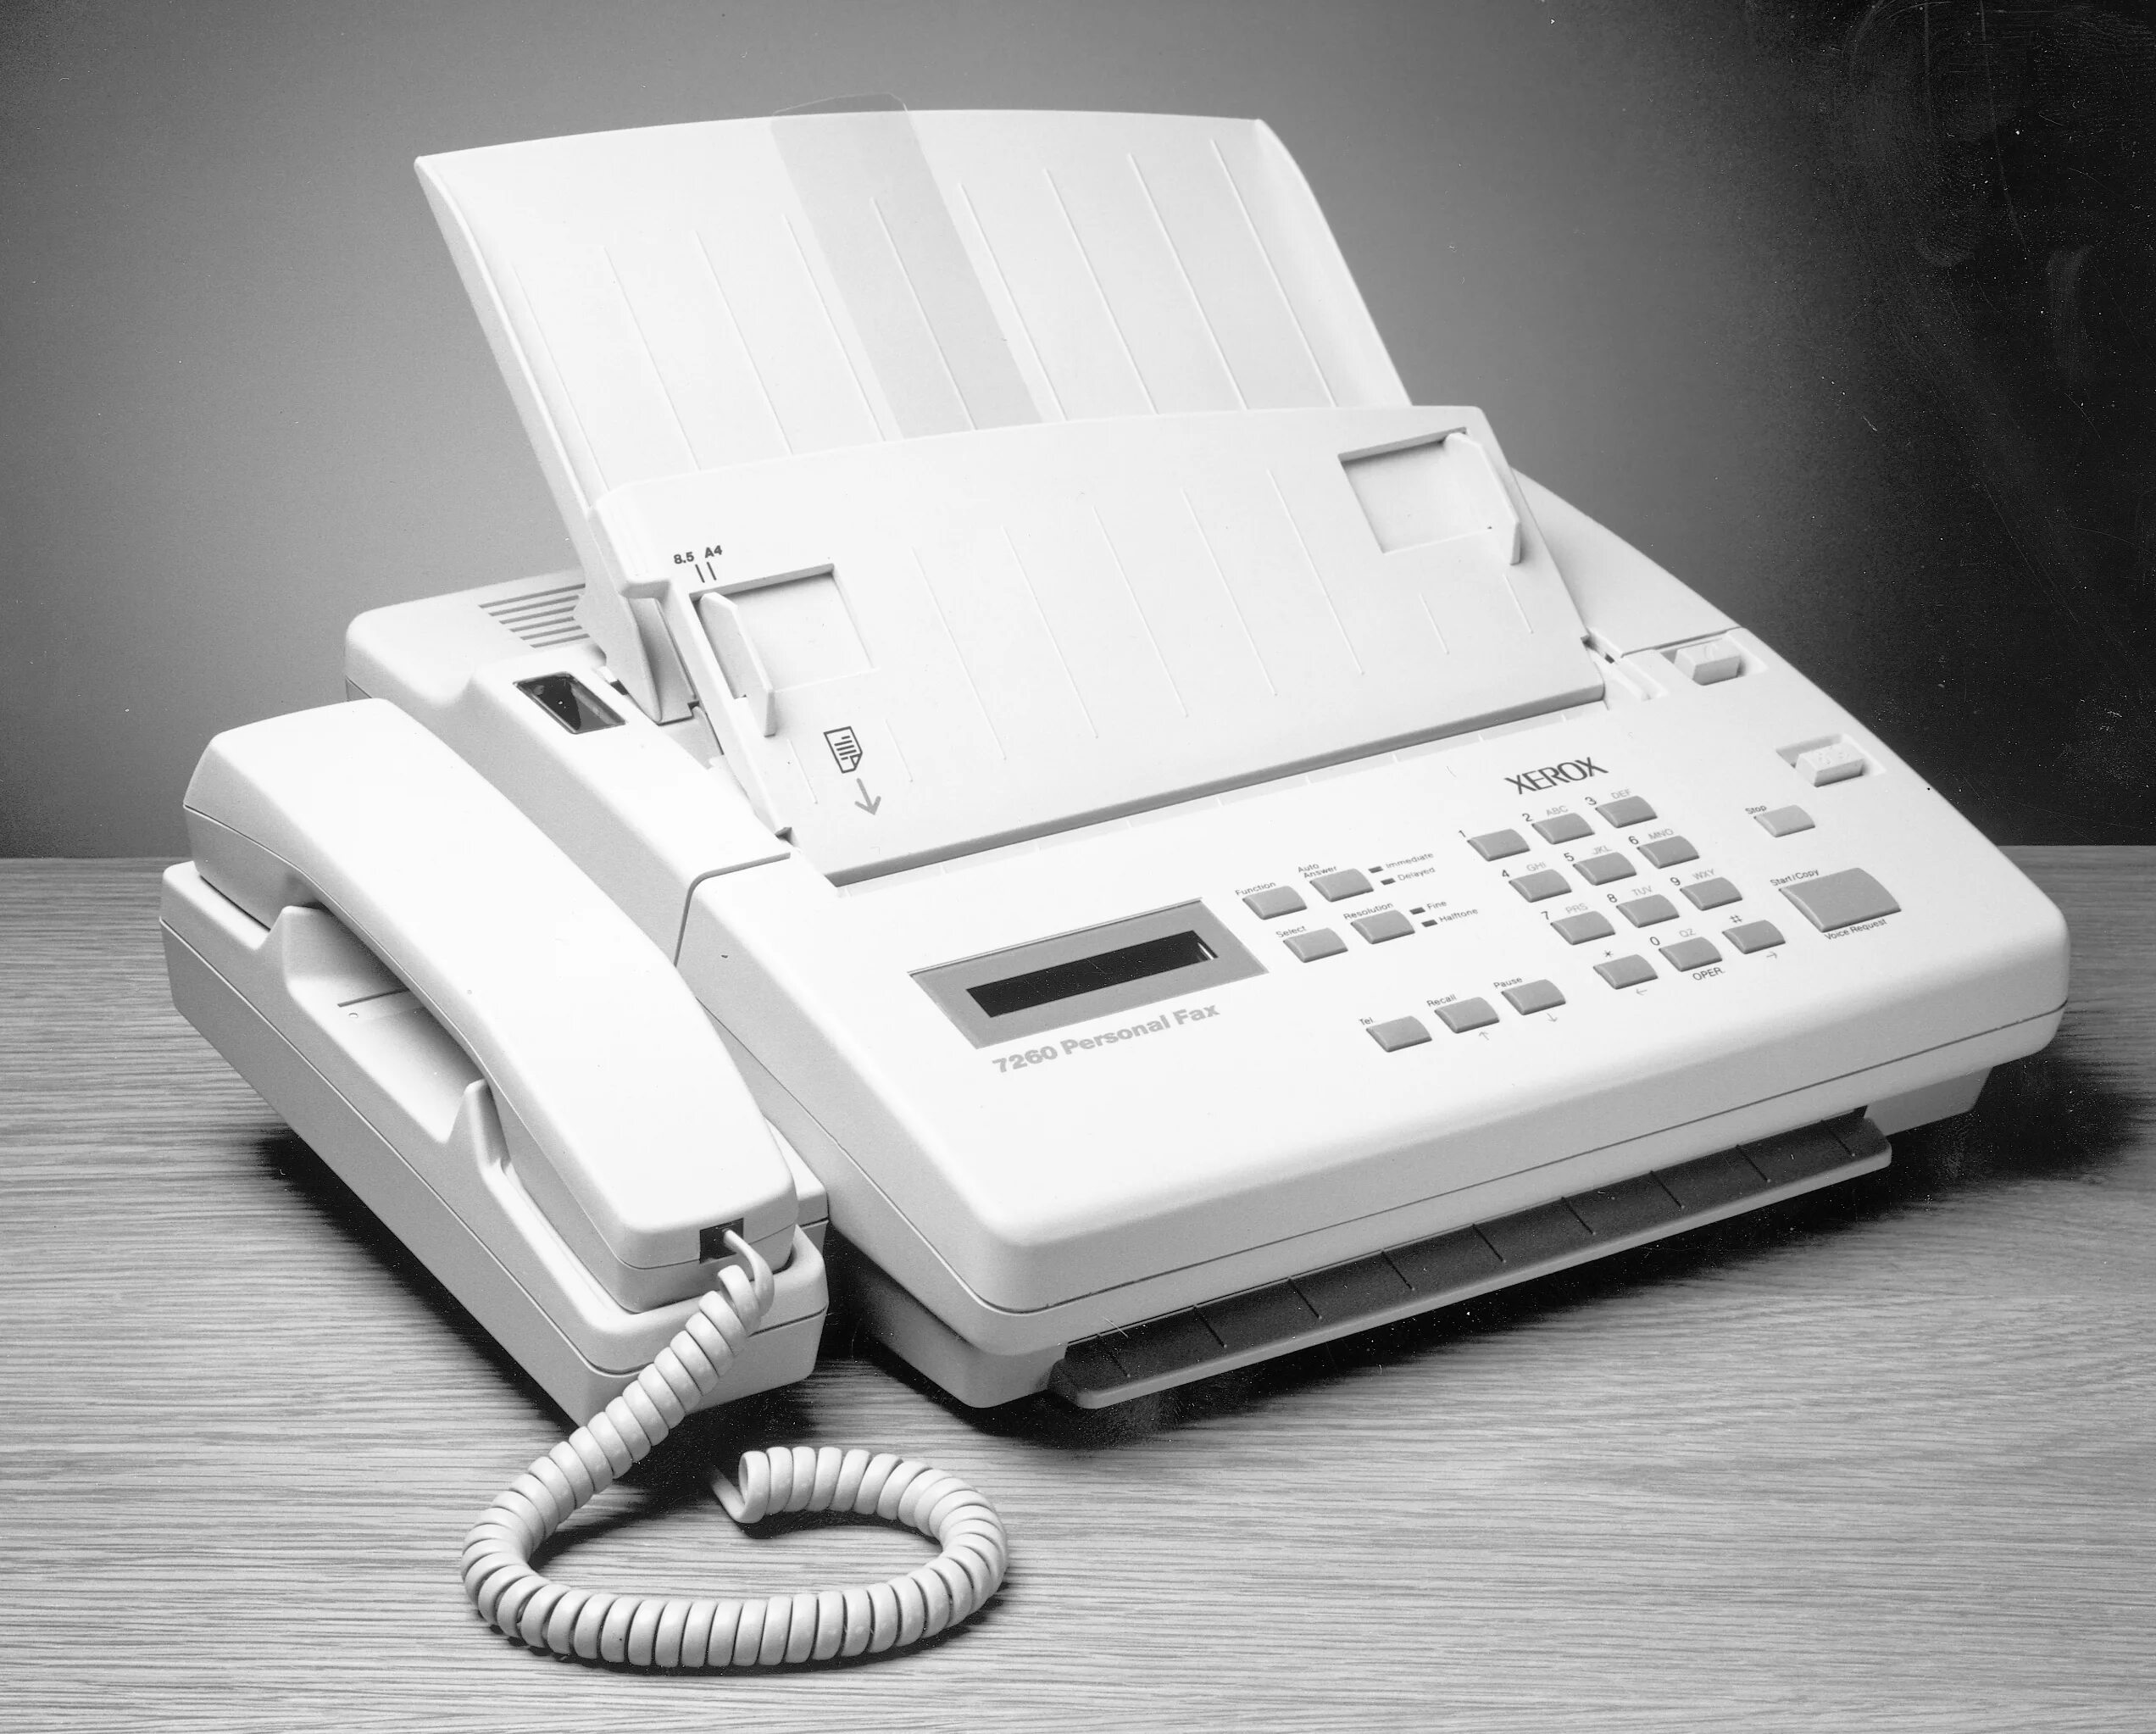 Fax-220 факсимильный аппарат. Xerox Fax 1994. Факсимильный аппарат Panasonic FC-984. Факс 1990. Город факс